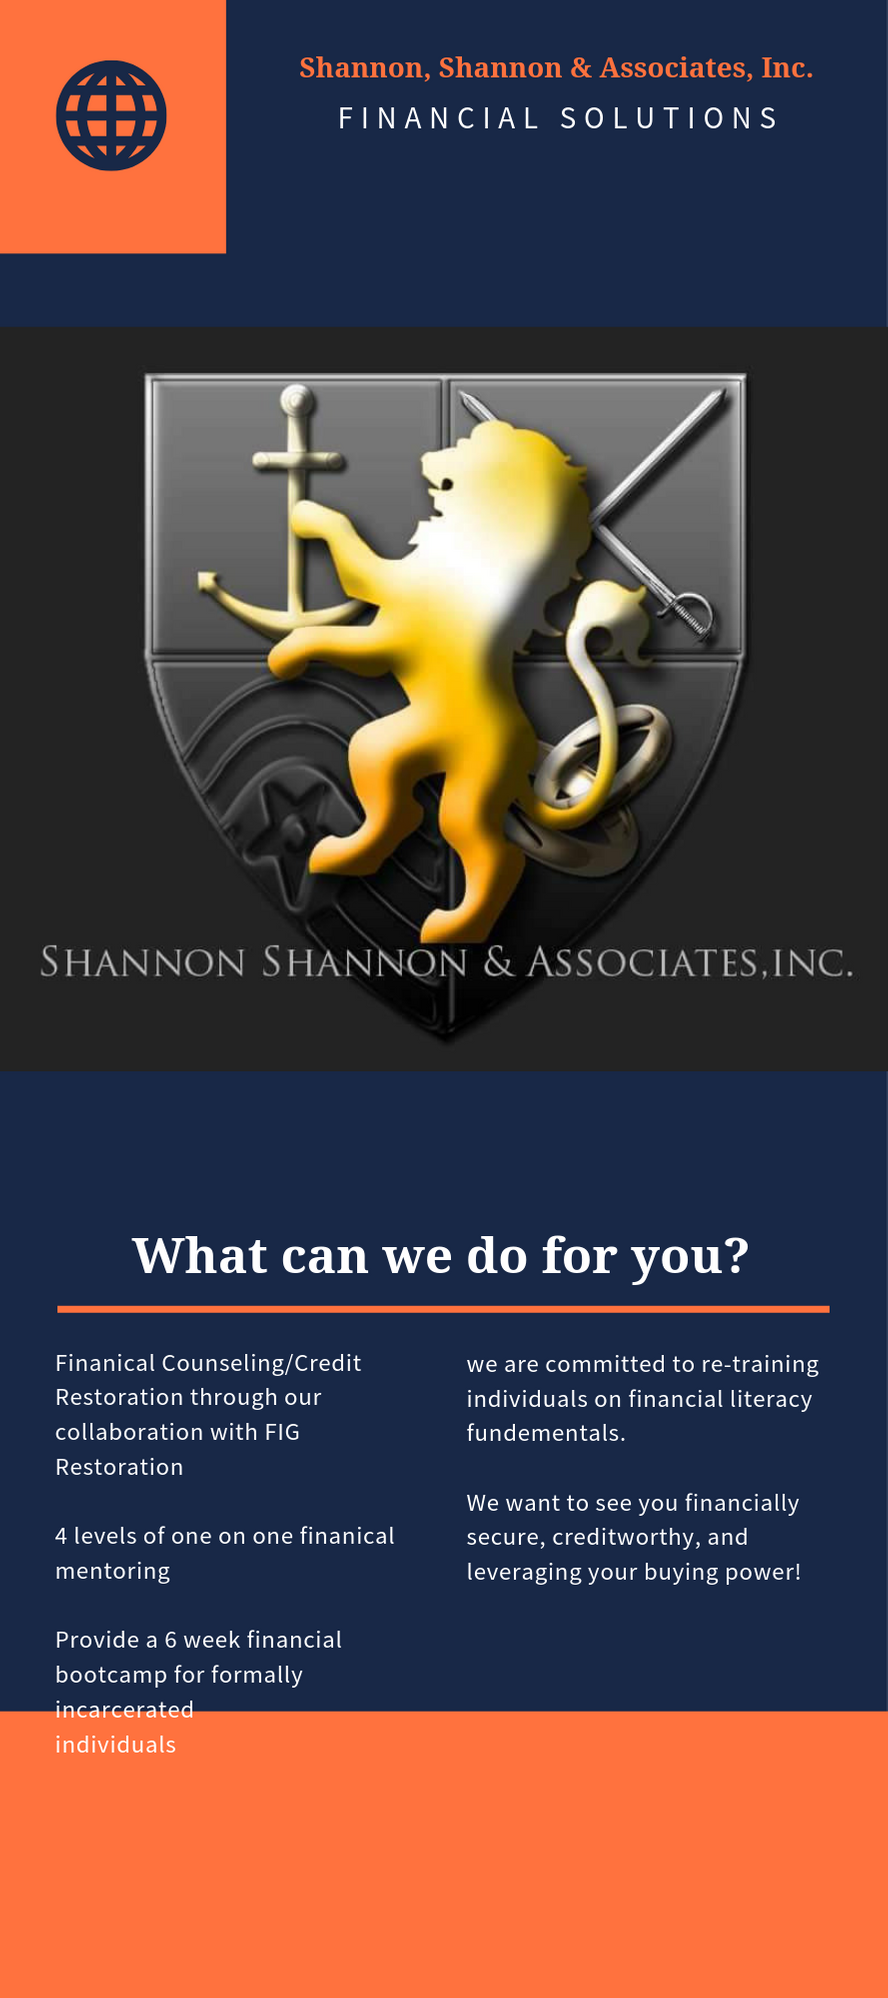 Shannon, Shannon & Associates, Inc. Photo